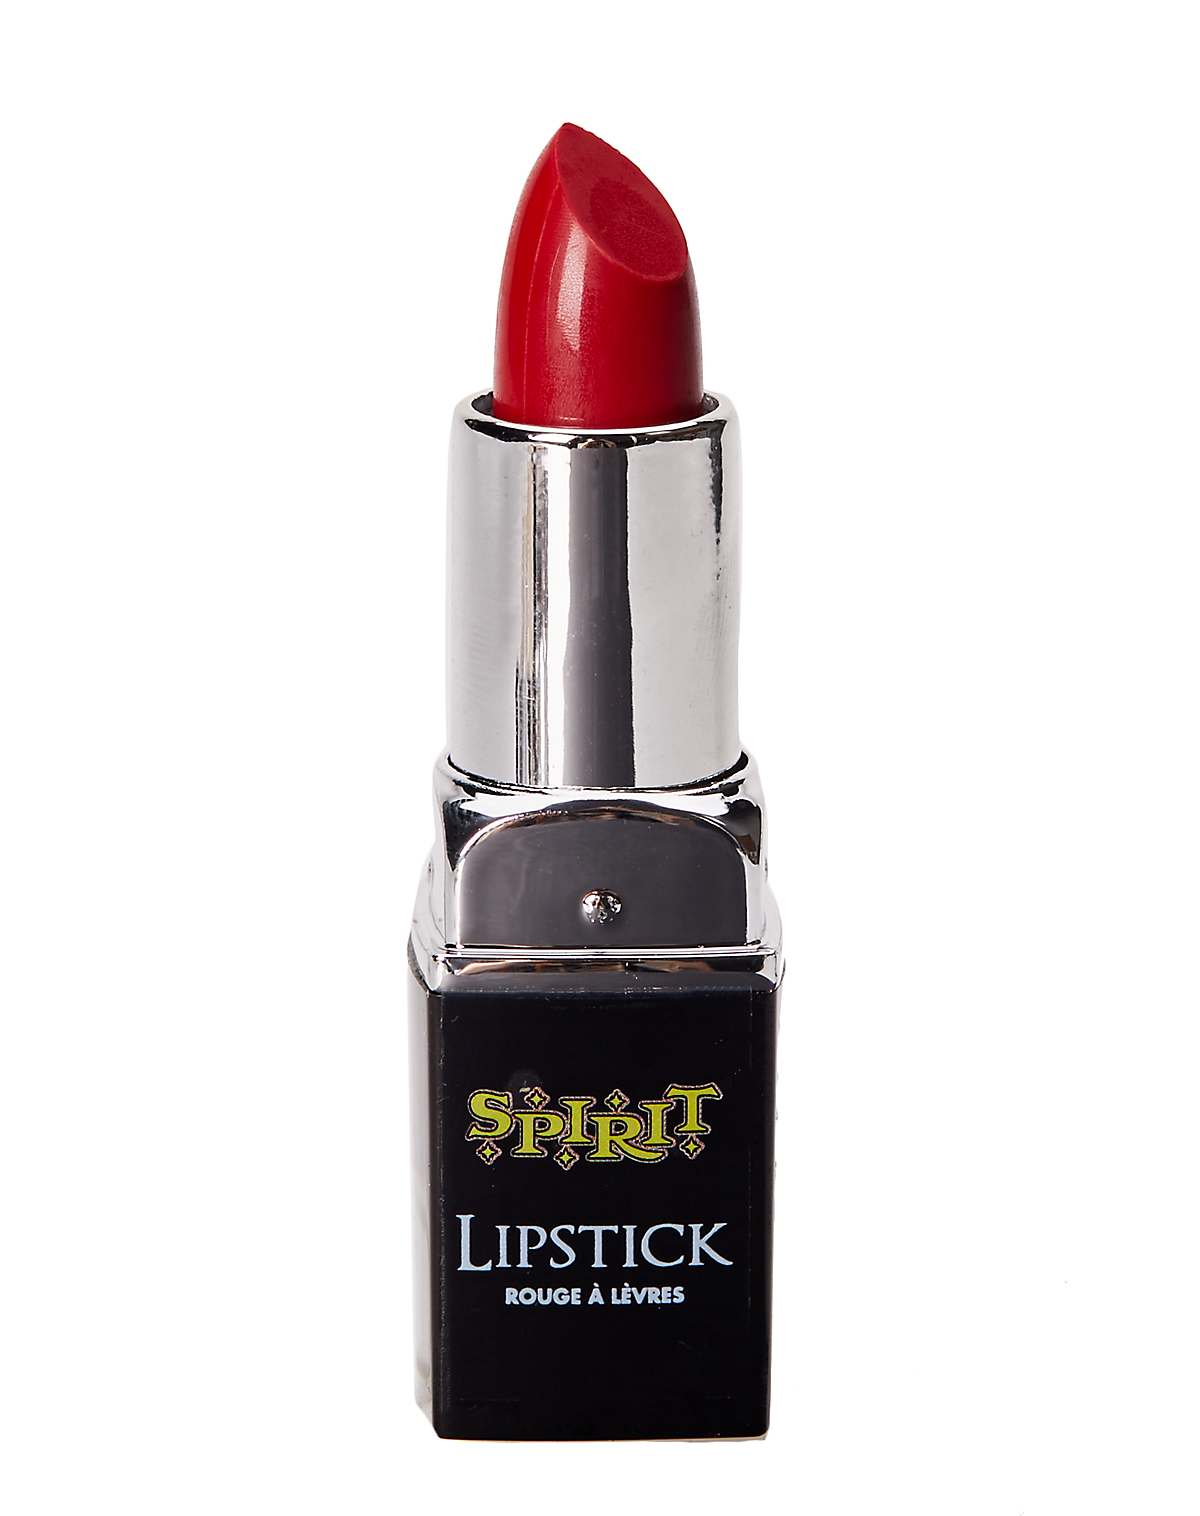 Red lipstick makeup